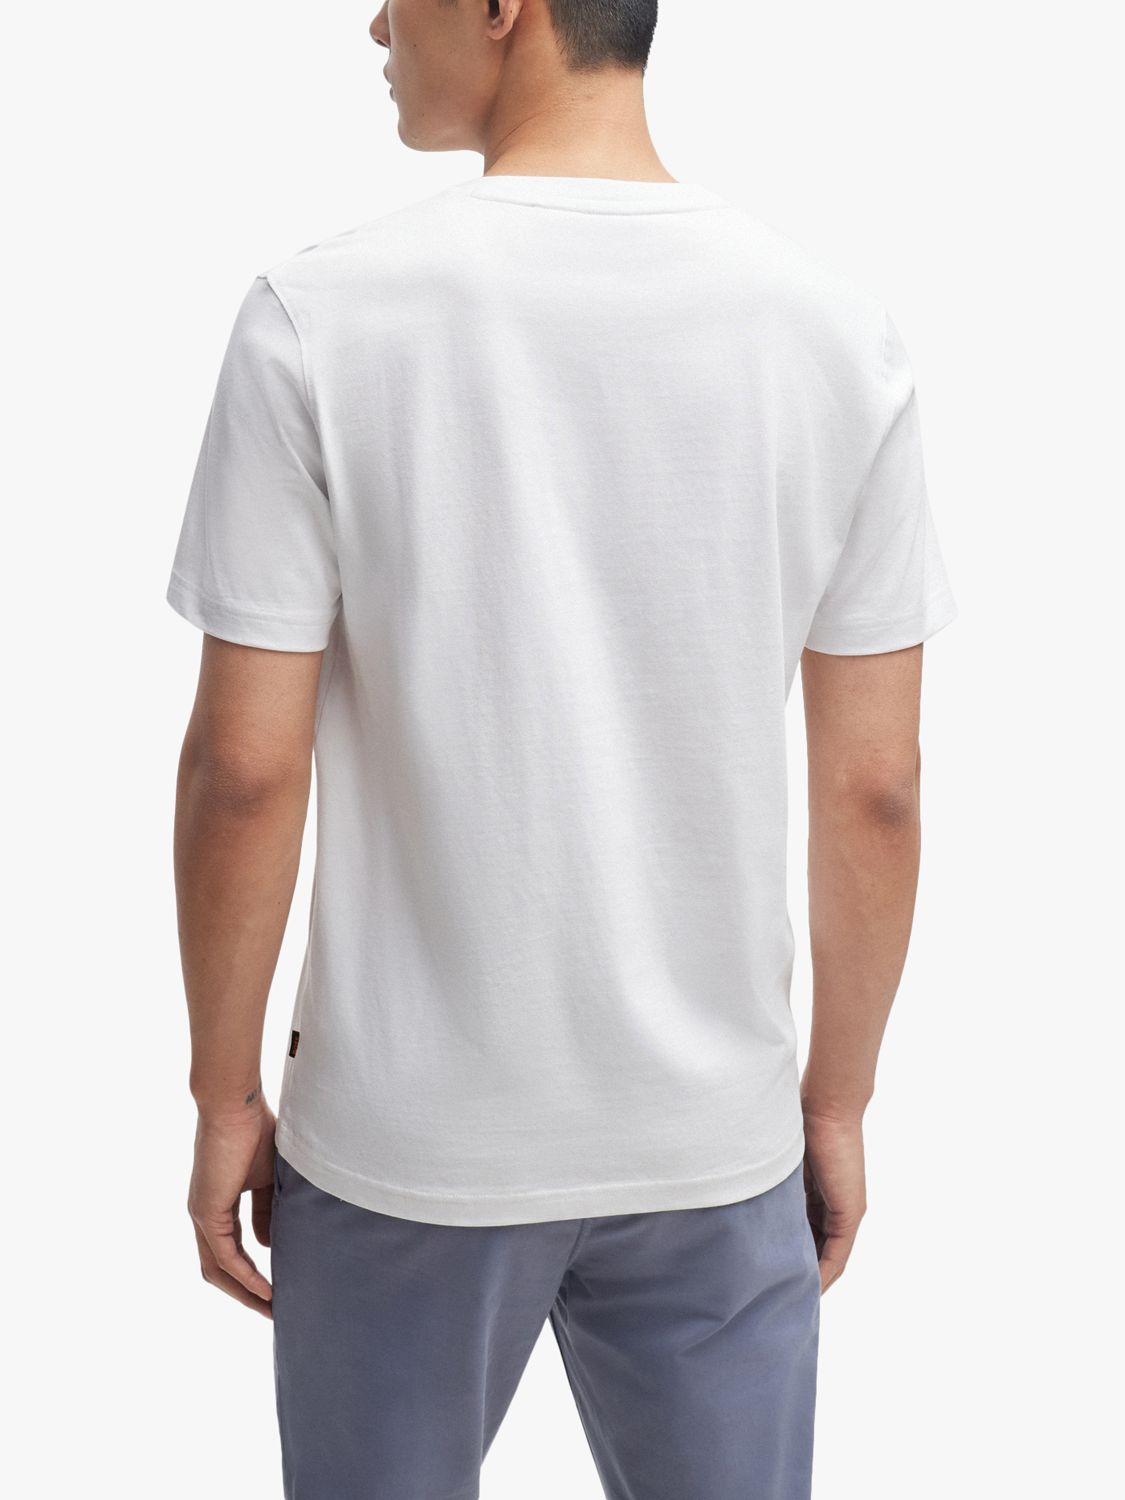 BOSS Tucan Cotton T-Shirt, White, M